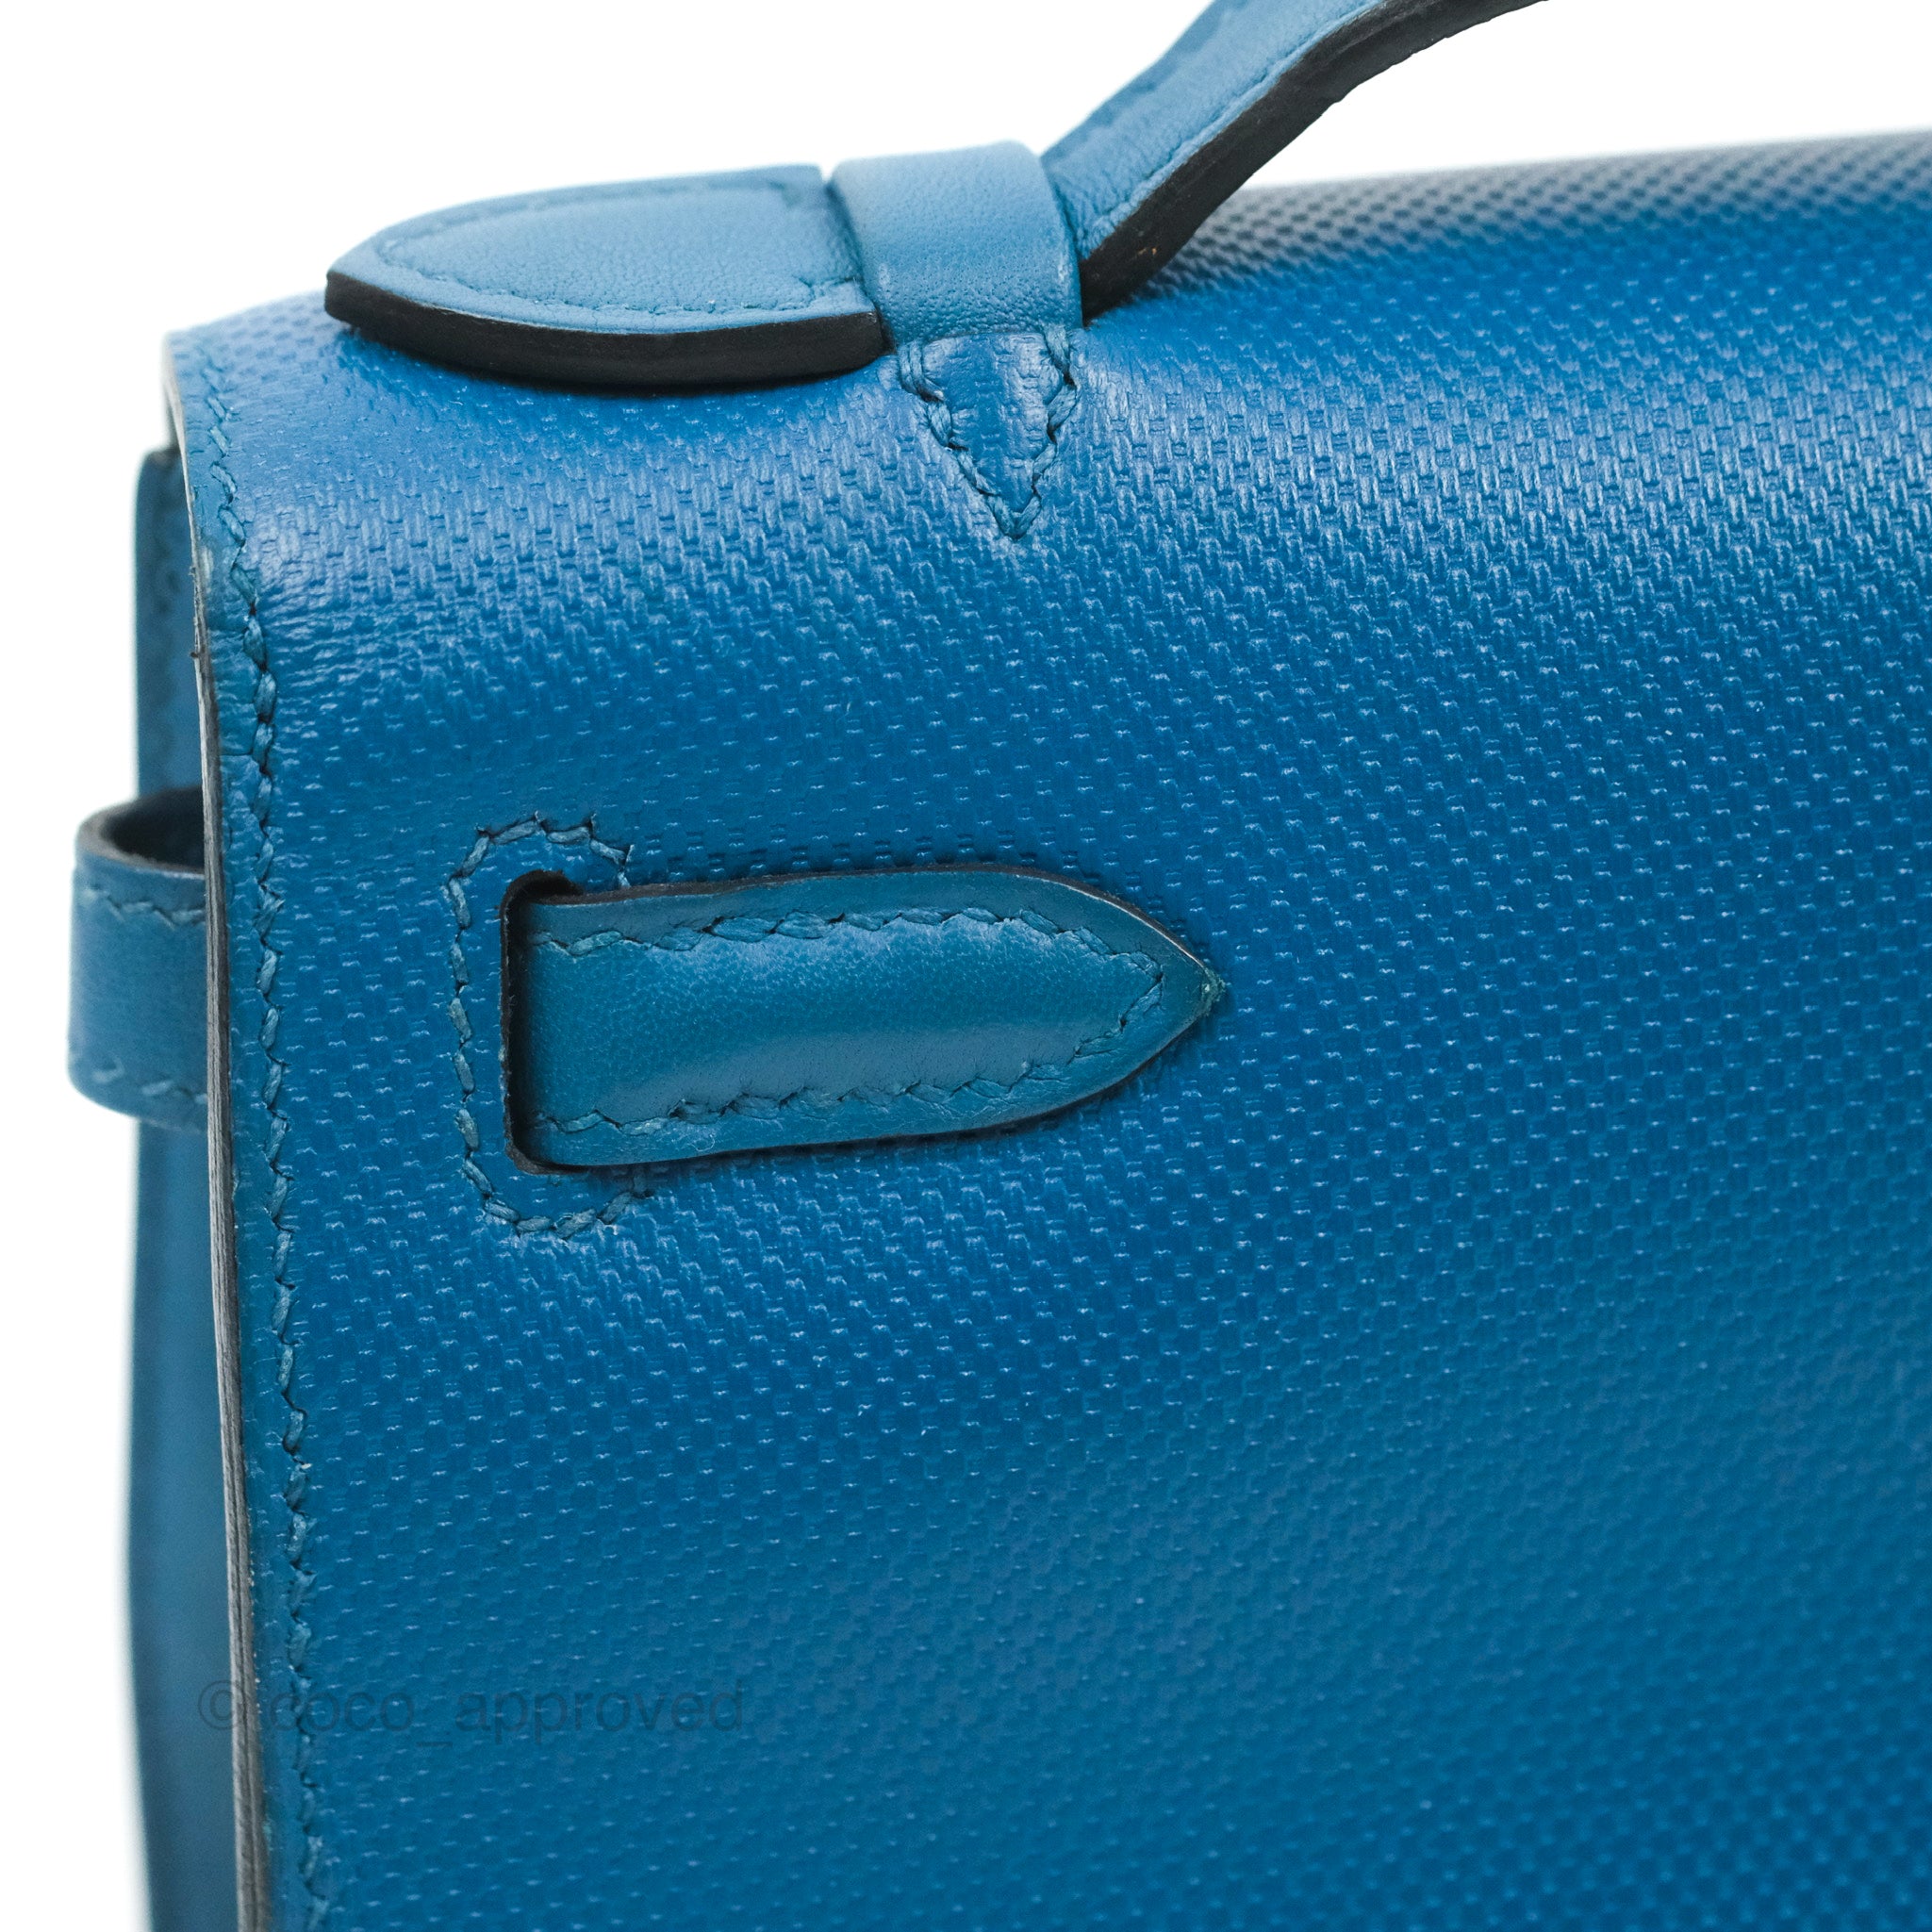 Sold at Auction: Hermes - Kelly Danse II 2019 - Deep Blue - Belt Bag -  Swift Leather